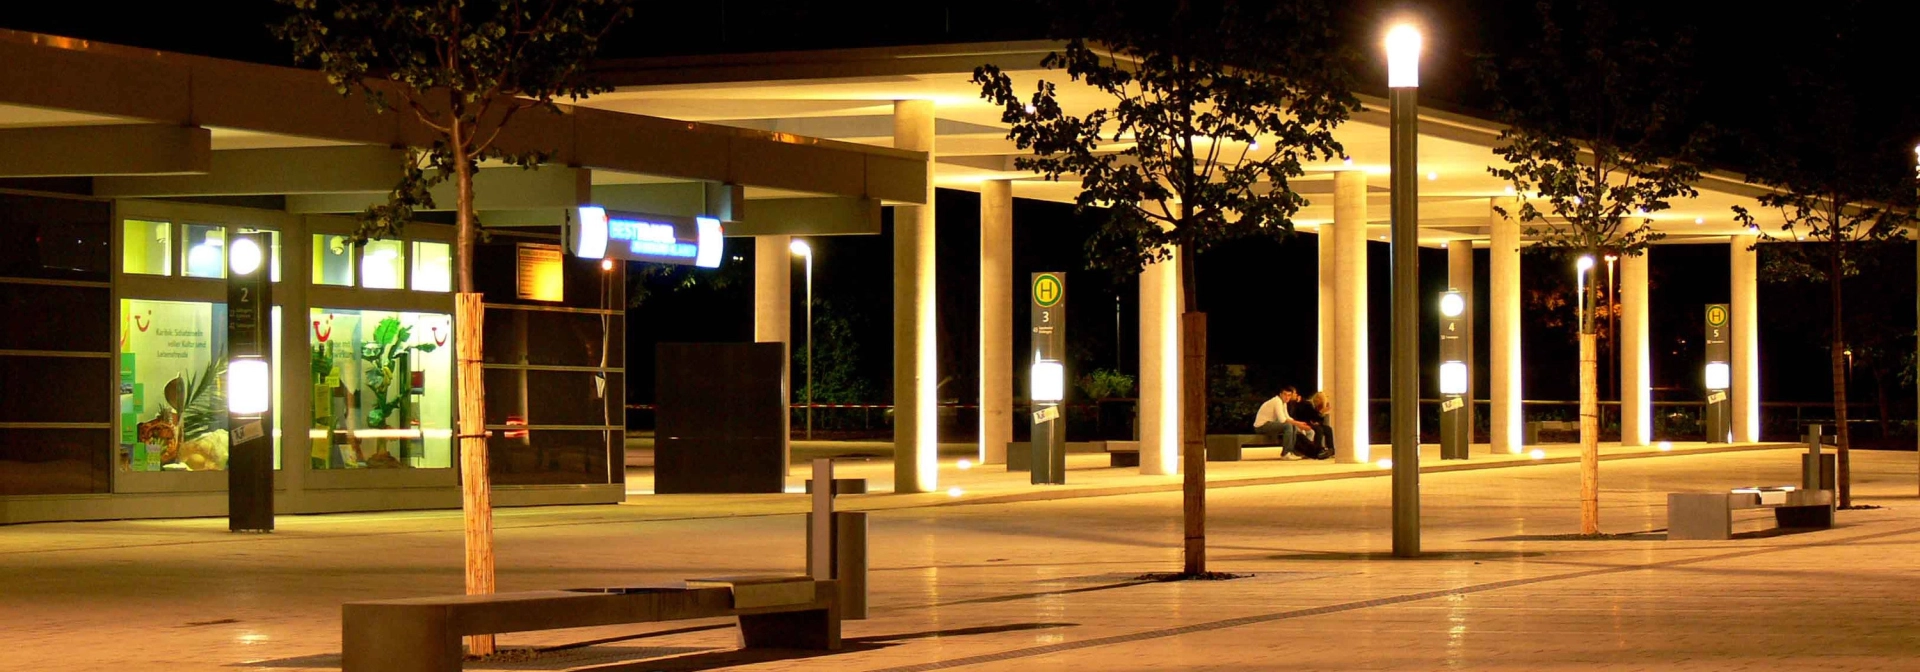 busbahnhof platz nacht